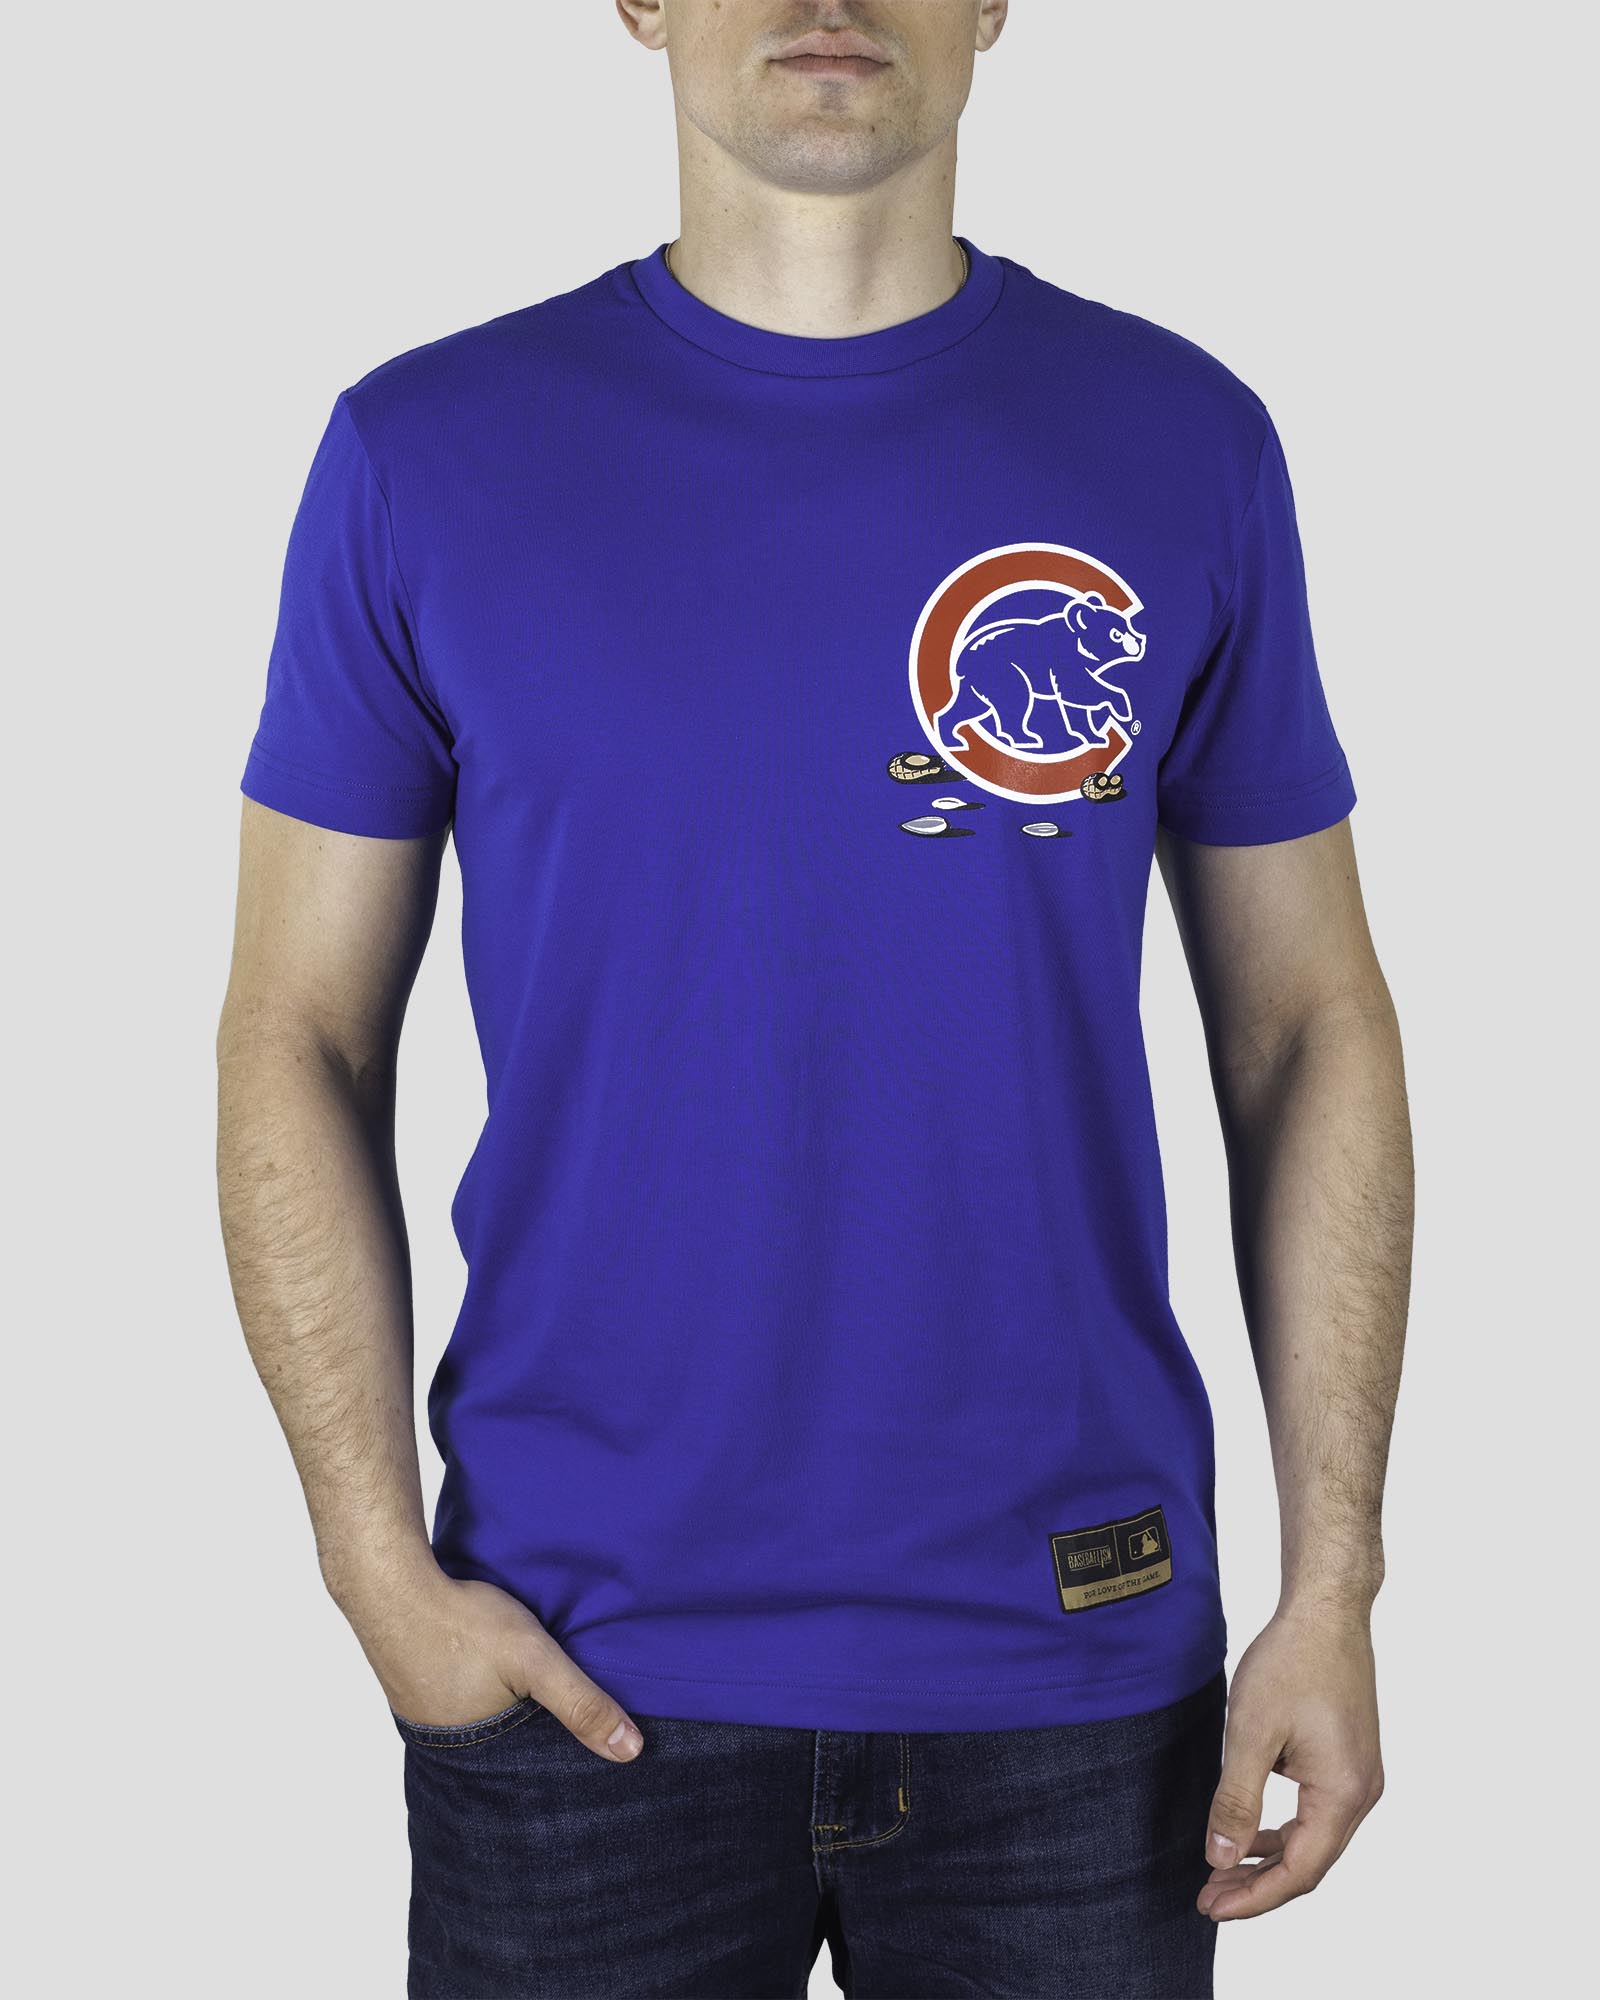 cubs baseball shirt